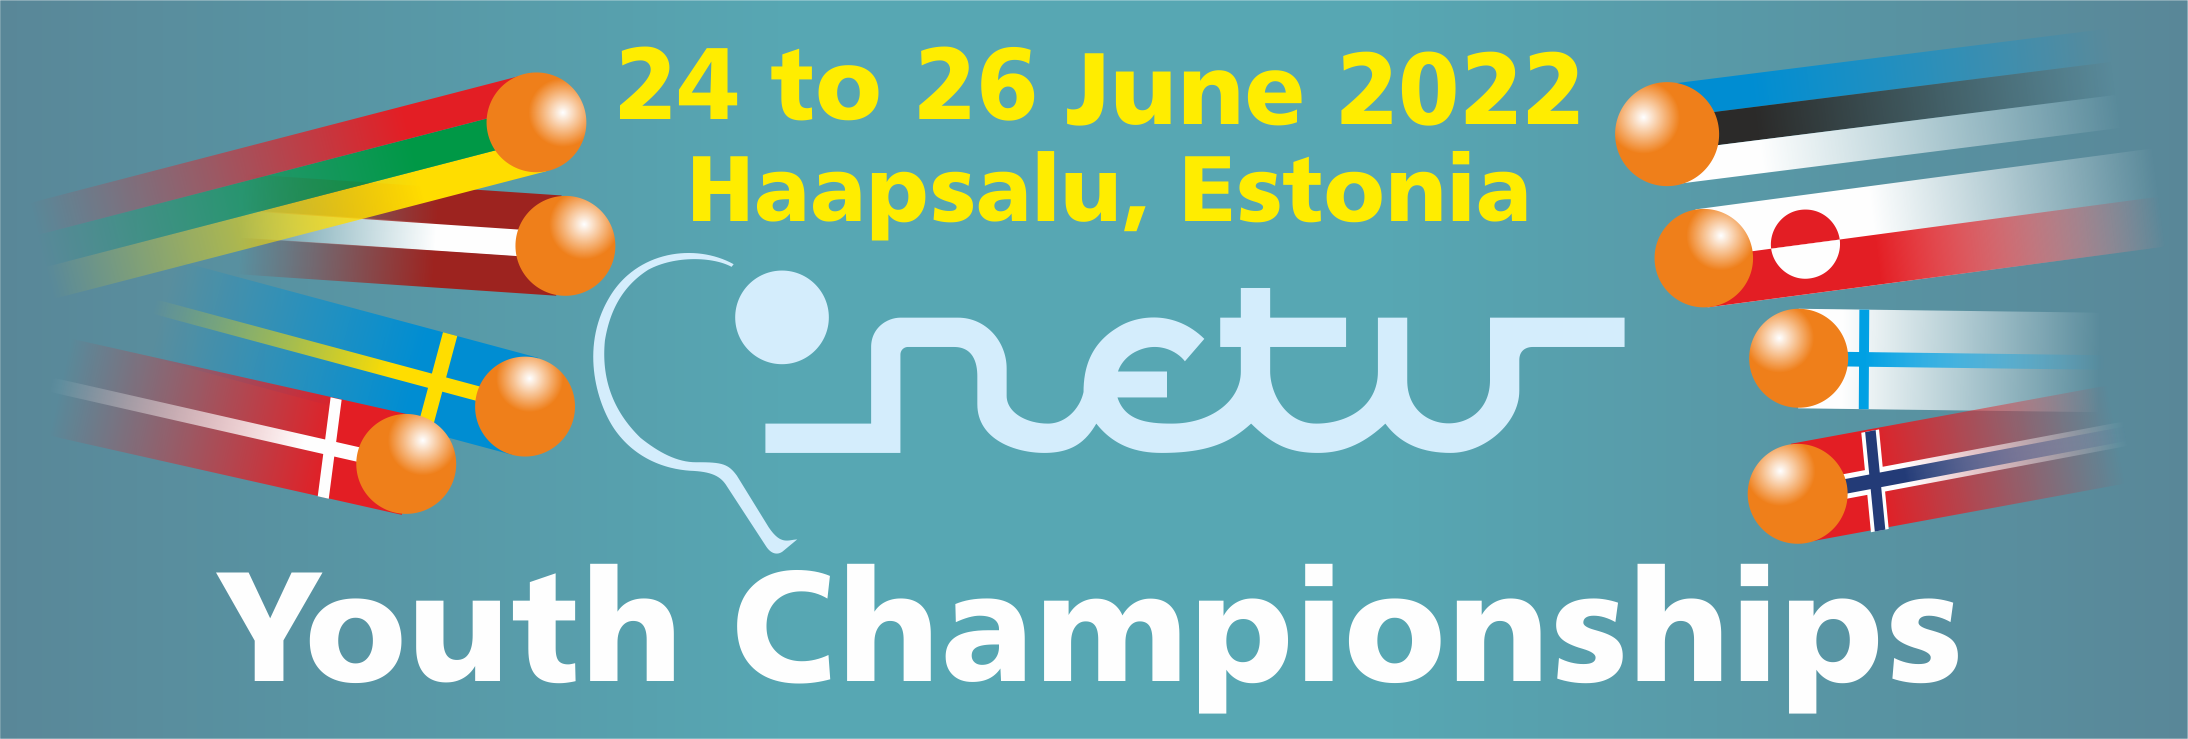 NORTH EUROPEAN TABLE TENNIS YOUTH CHAMPIONSHIPS 2022, Estonia, Haapsalu, 24-26 June